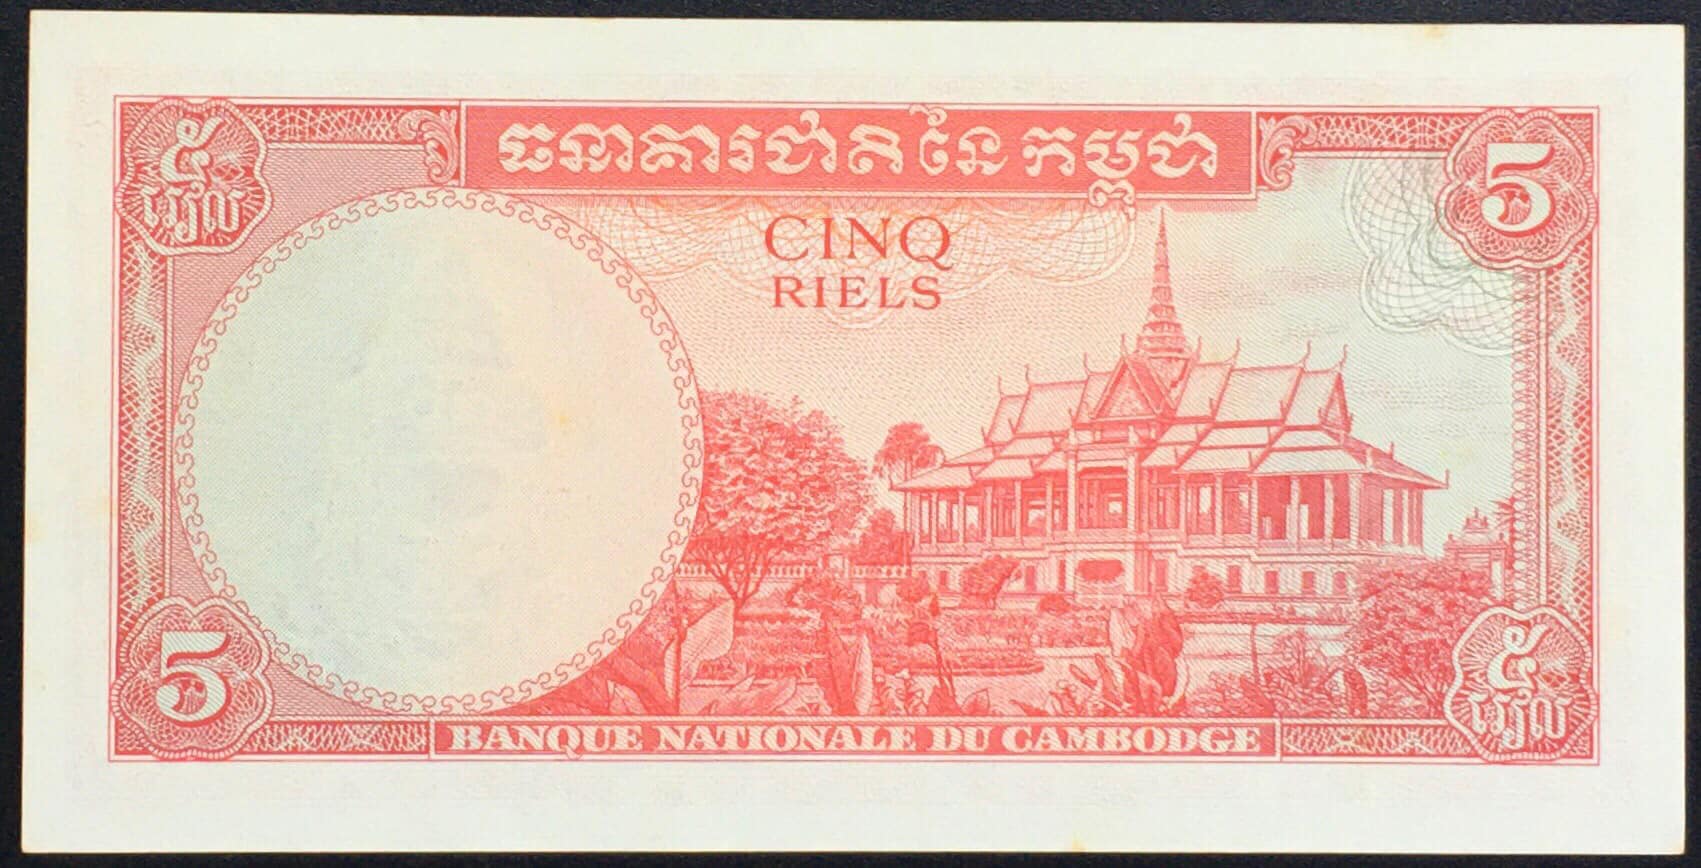 Tiền xưa Campuchia 5 riels 1972